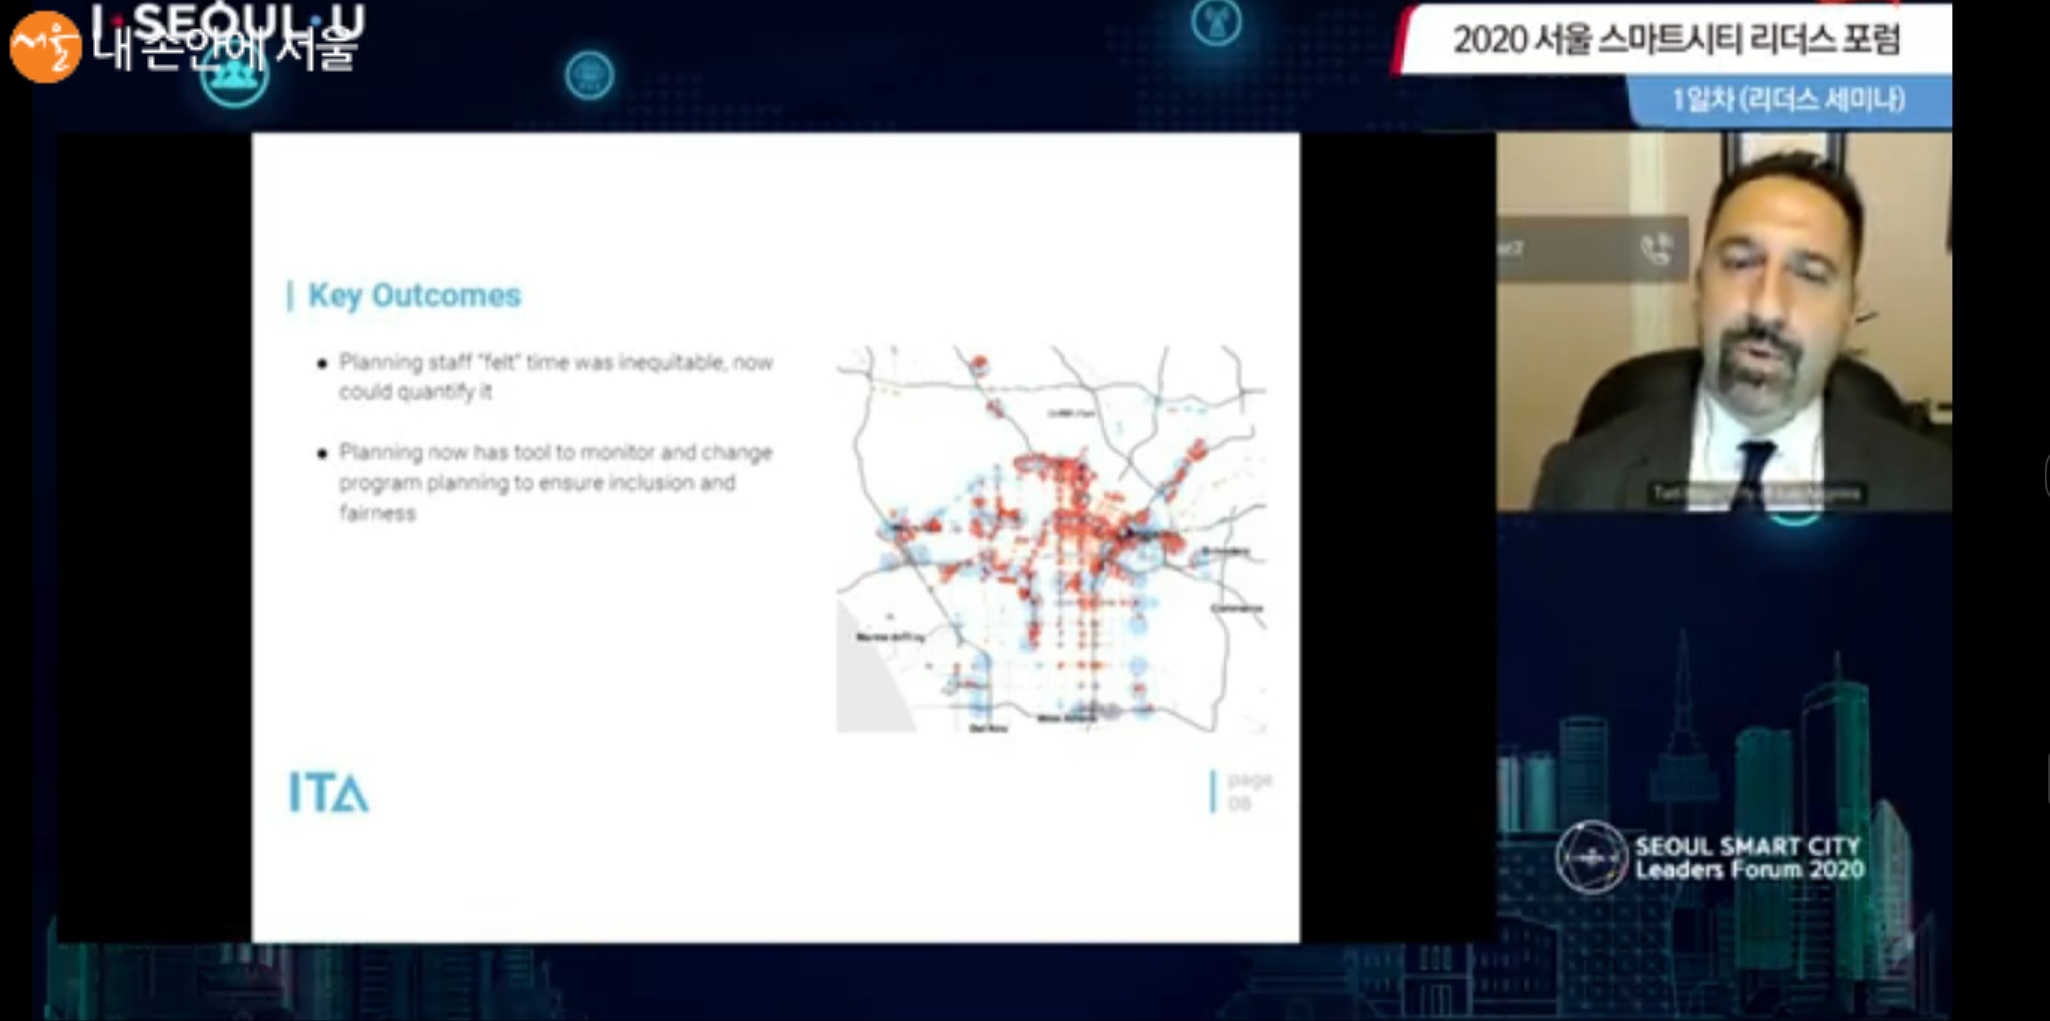  LA 스마트 도시의 구축망을 설명하고 있는 테드 로스 최고정보책임자 